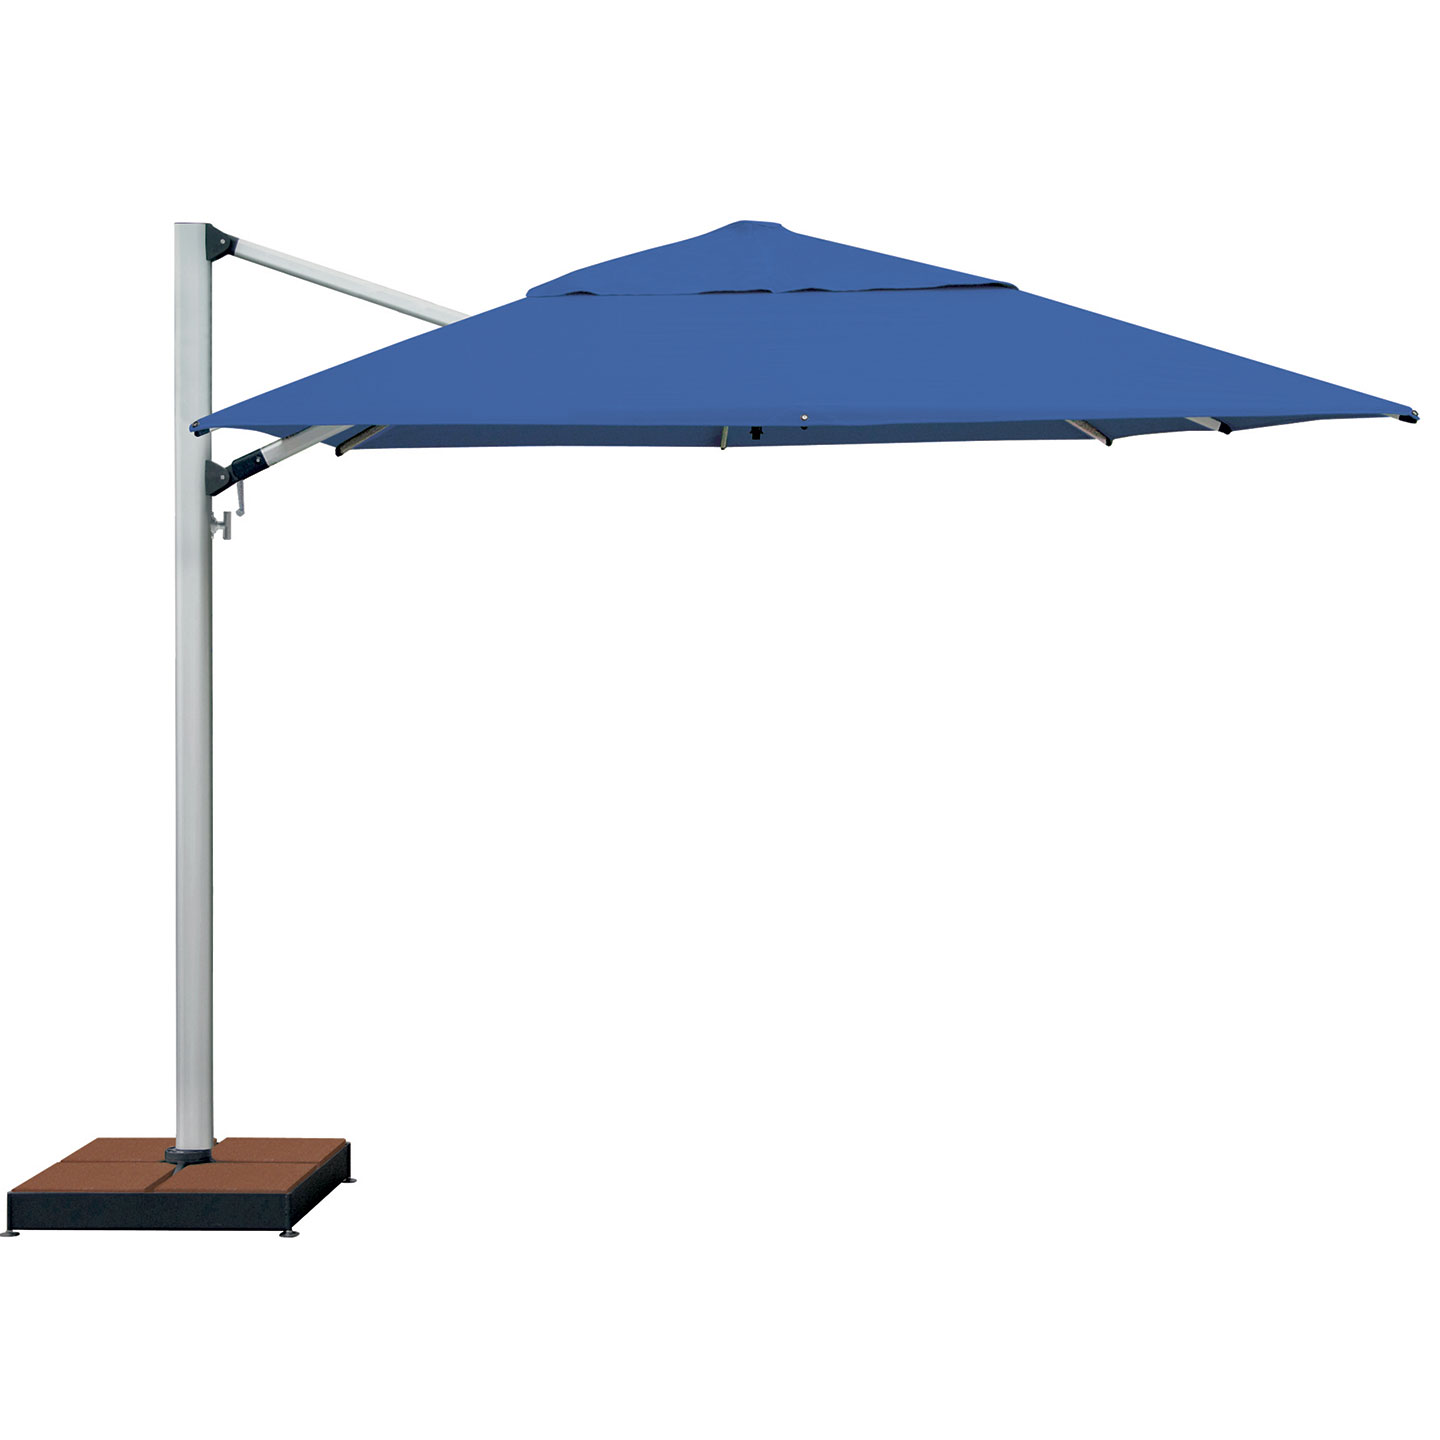 Haworth Janus Titan Umbrella Accessories with blue top and black base